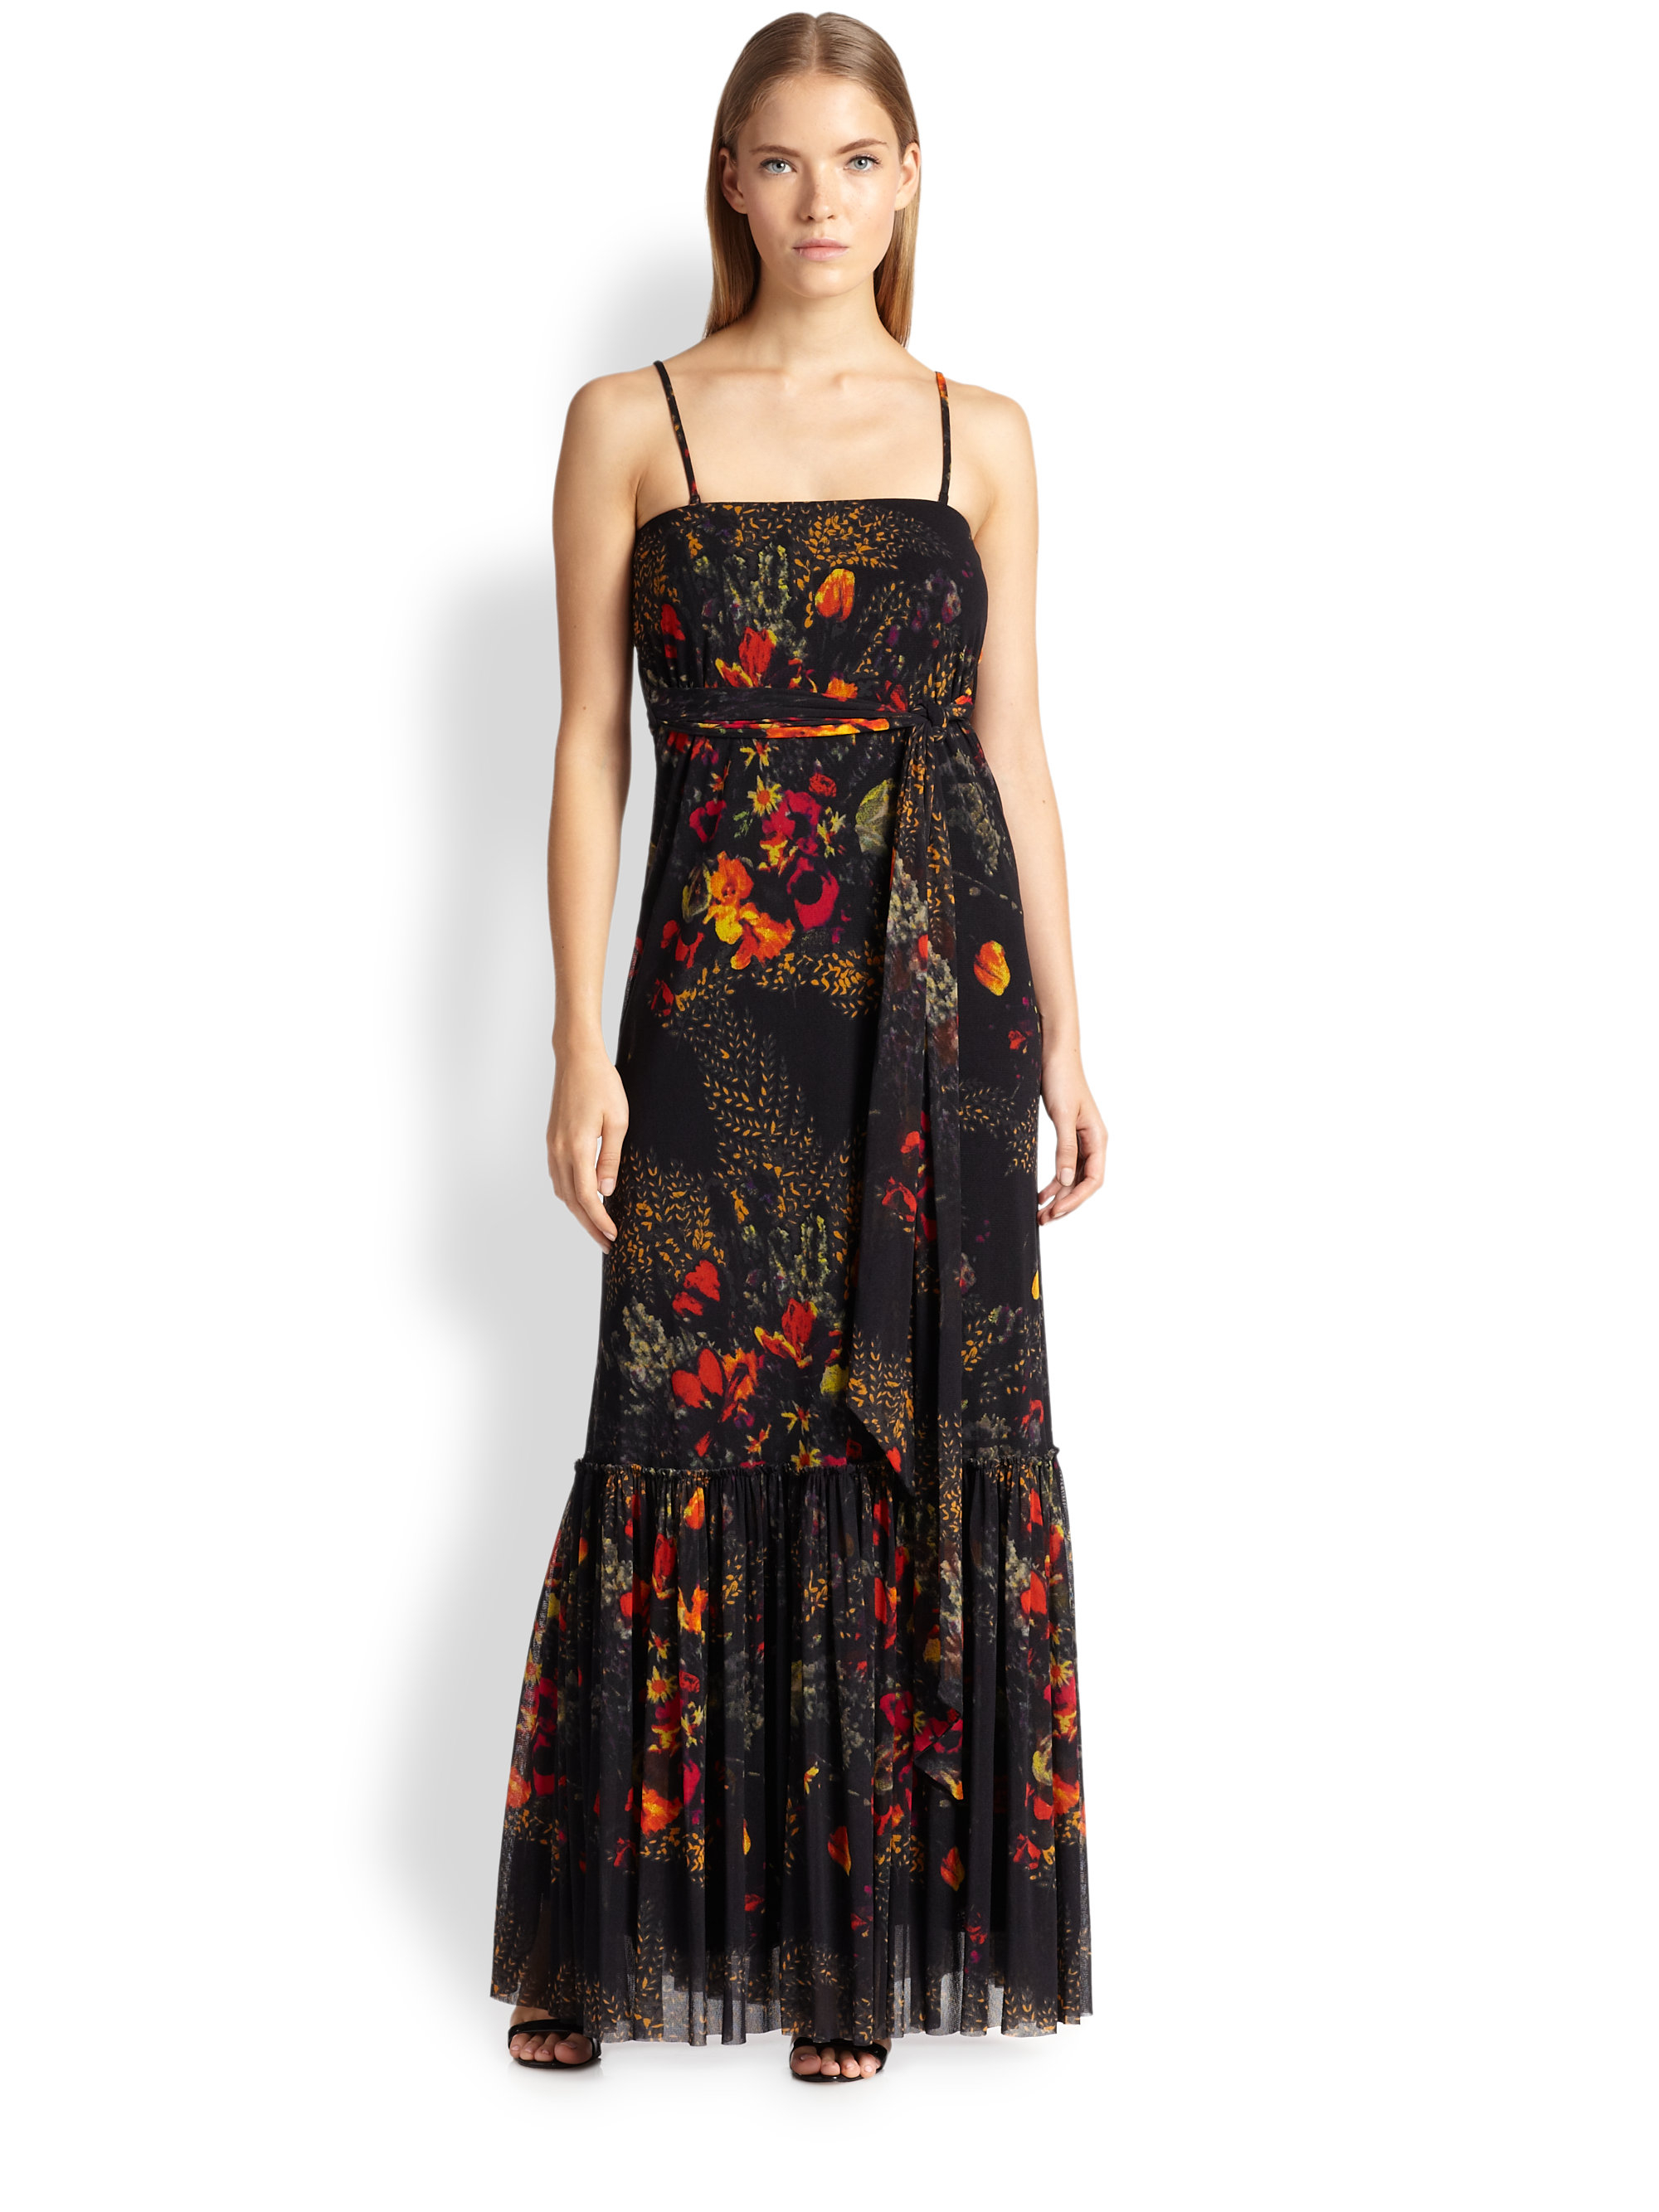 Lyst - Jean paul gaultier Floral-Print Tulle Maxi Dress in Black